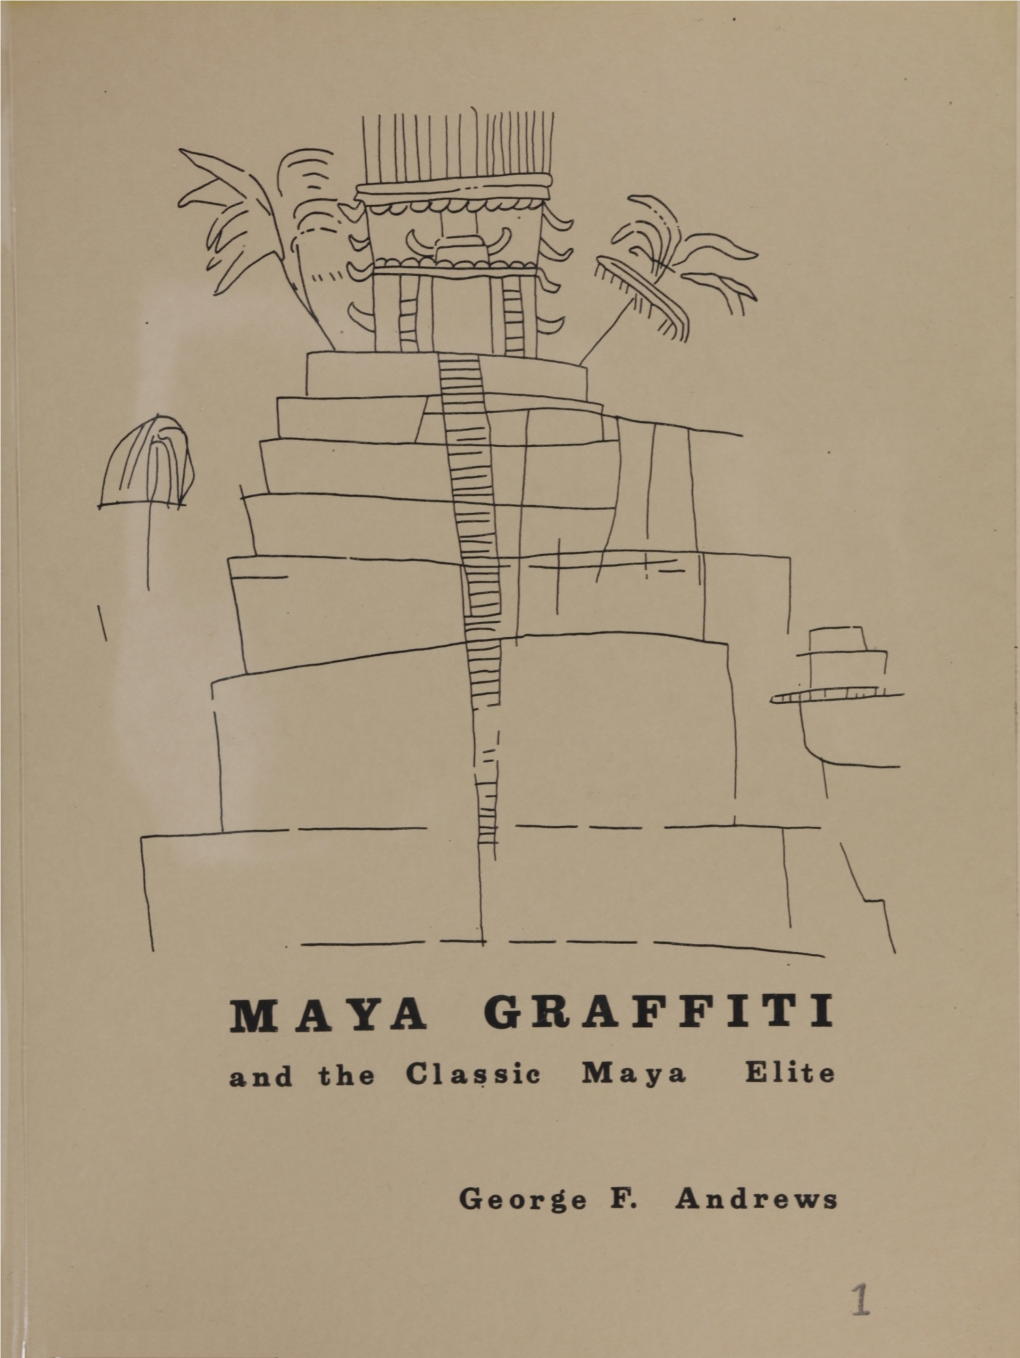 MAYA GRAFFITI and the Classic Maya Elite